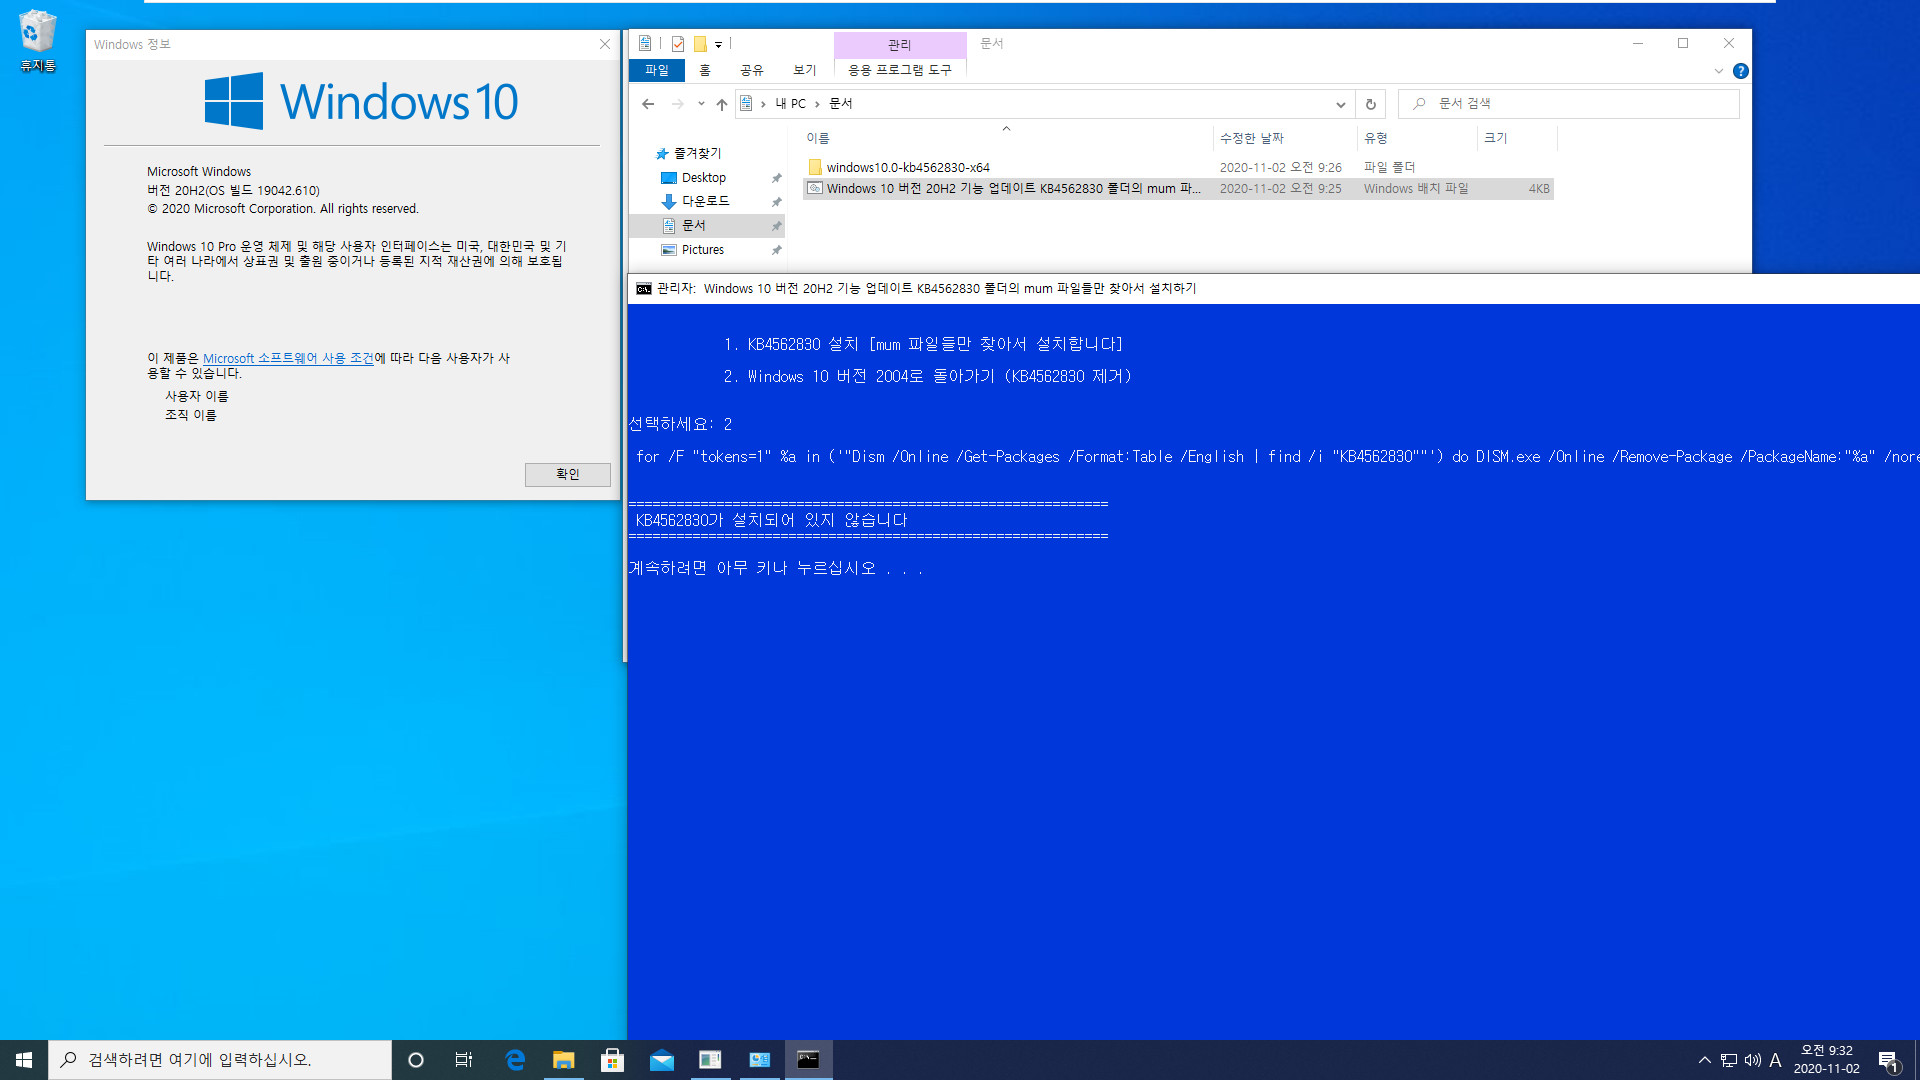 Windows 10 버전 20H2 기능 업데이트 KB4562830 폴더의 mum 파일들만 찾아서 설치하기.bat - 크로미엄 엣지 설치하지 않고 버전 20H2만 설치하기 테스트 2020-11-02_093228.jpg